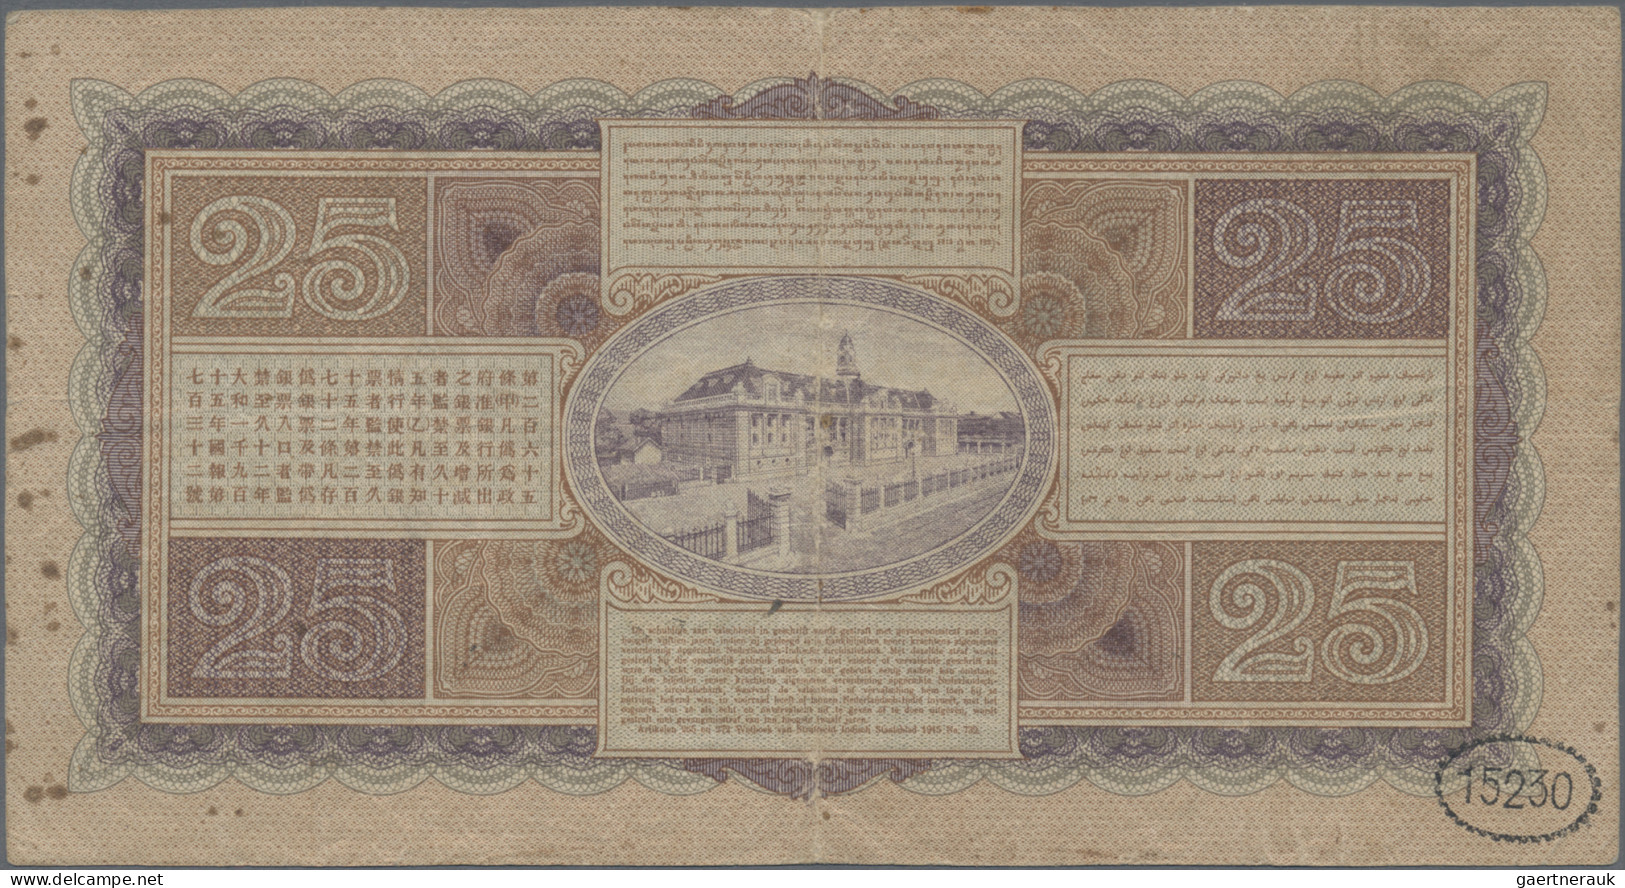 Netherlands Indies: De Javasche Bank, set with 5 banknotes, series 1930-1939, co